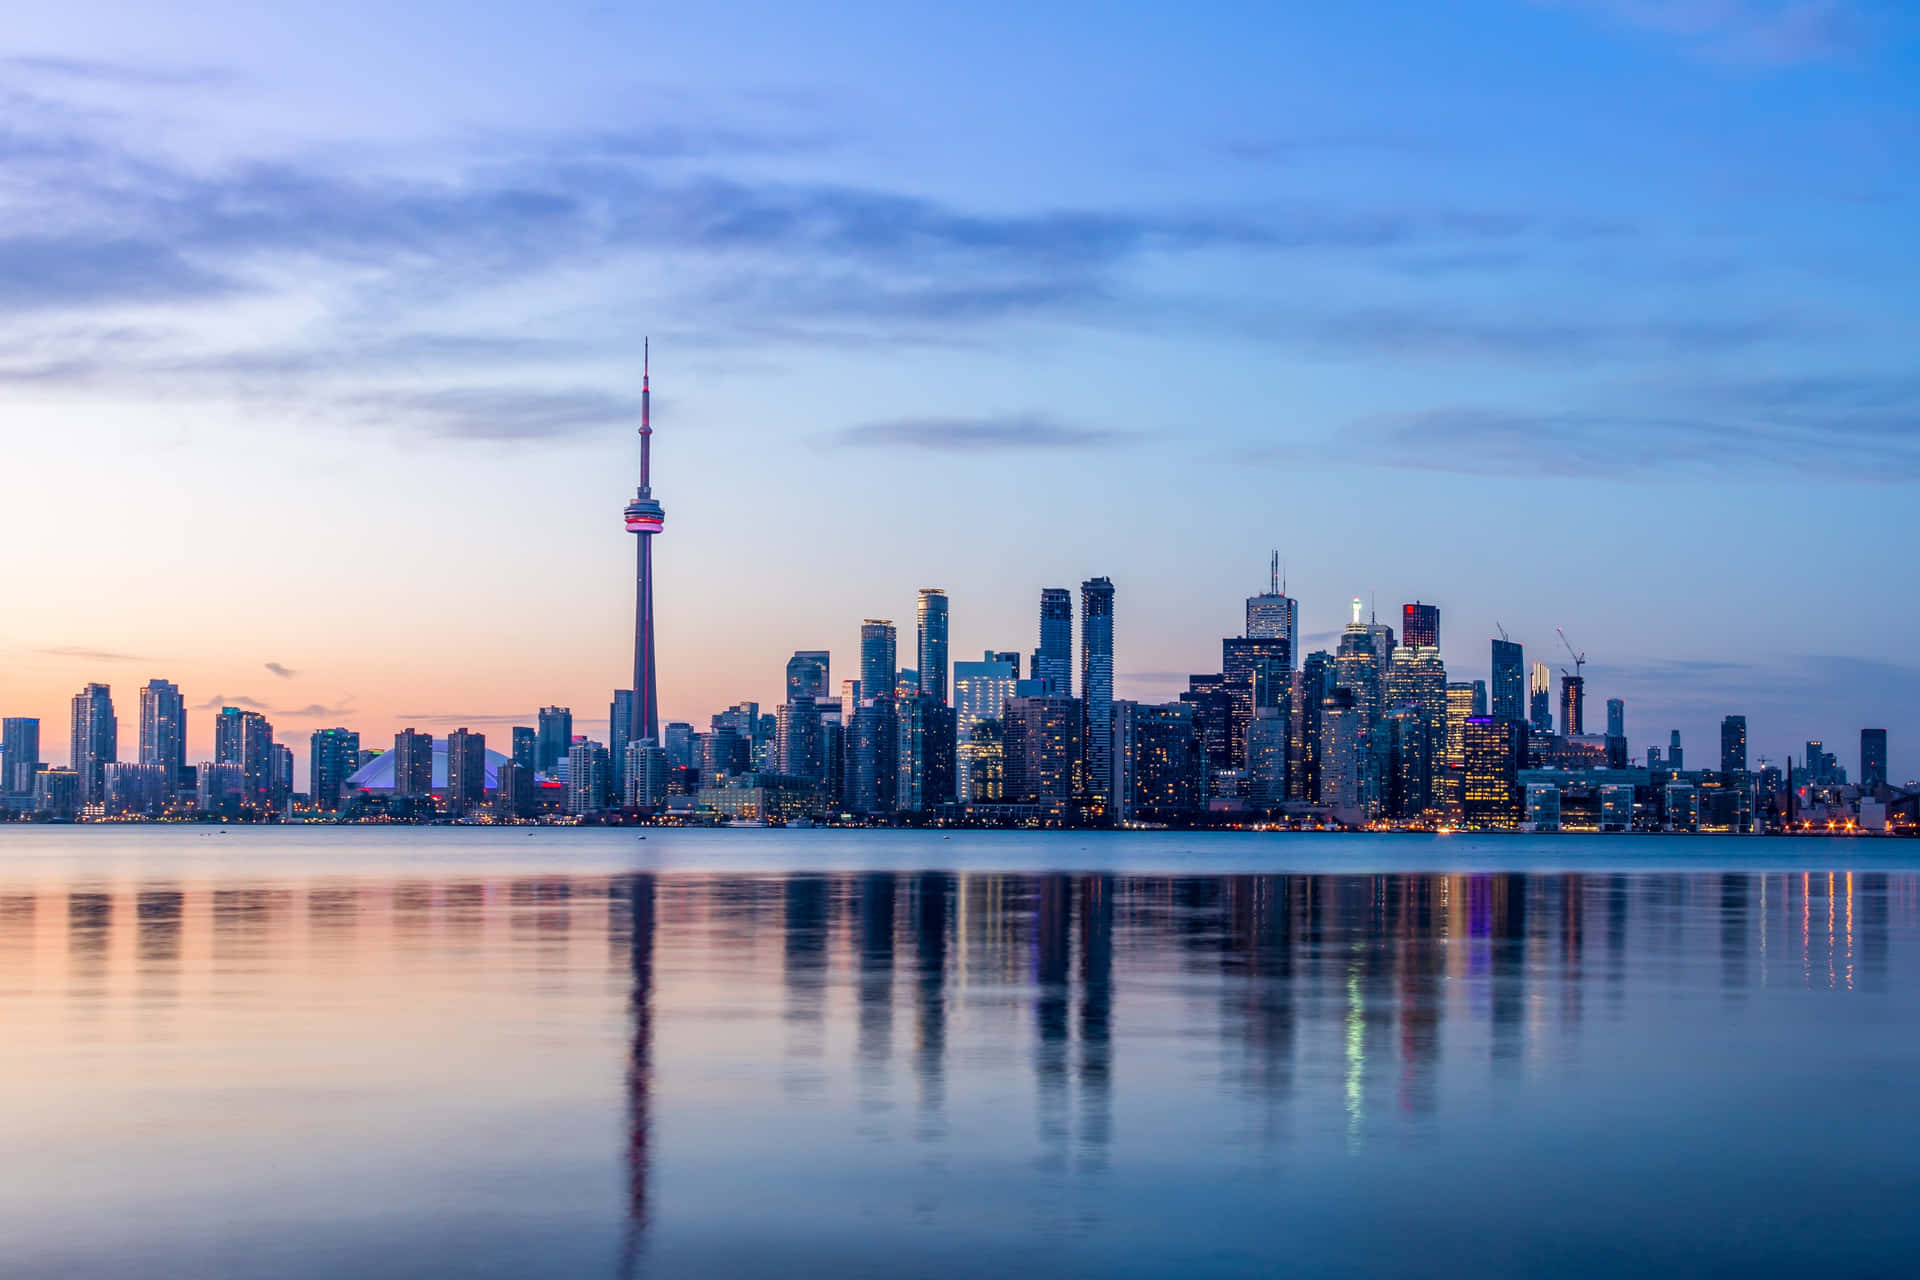 Enjoy a Beautiful Evening of the Toronto Skyline!